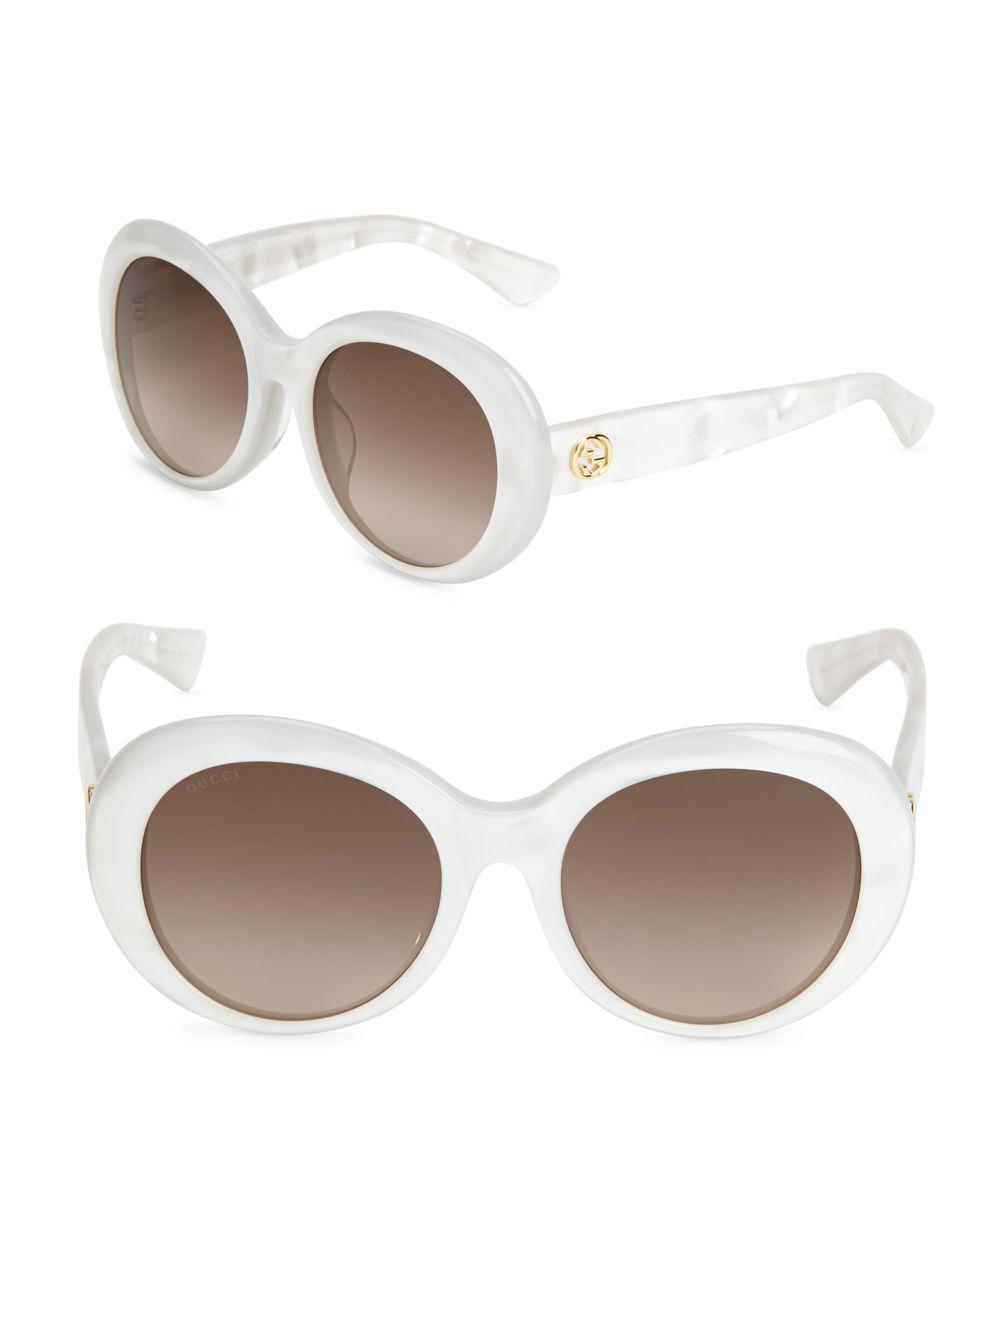 Gucci 54mm Round Sunglasses in White - Lyst